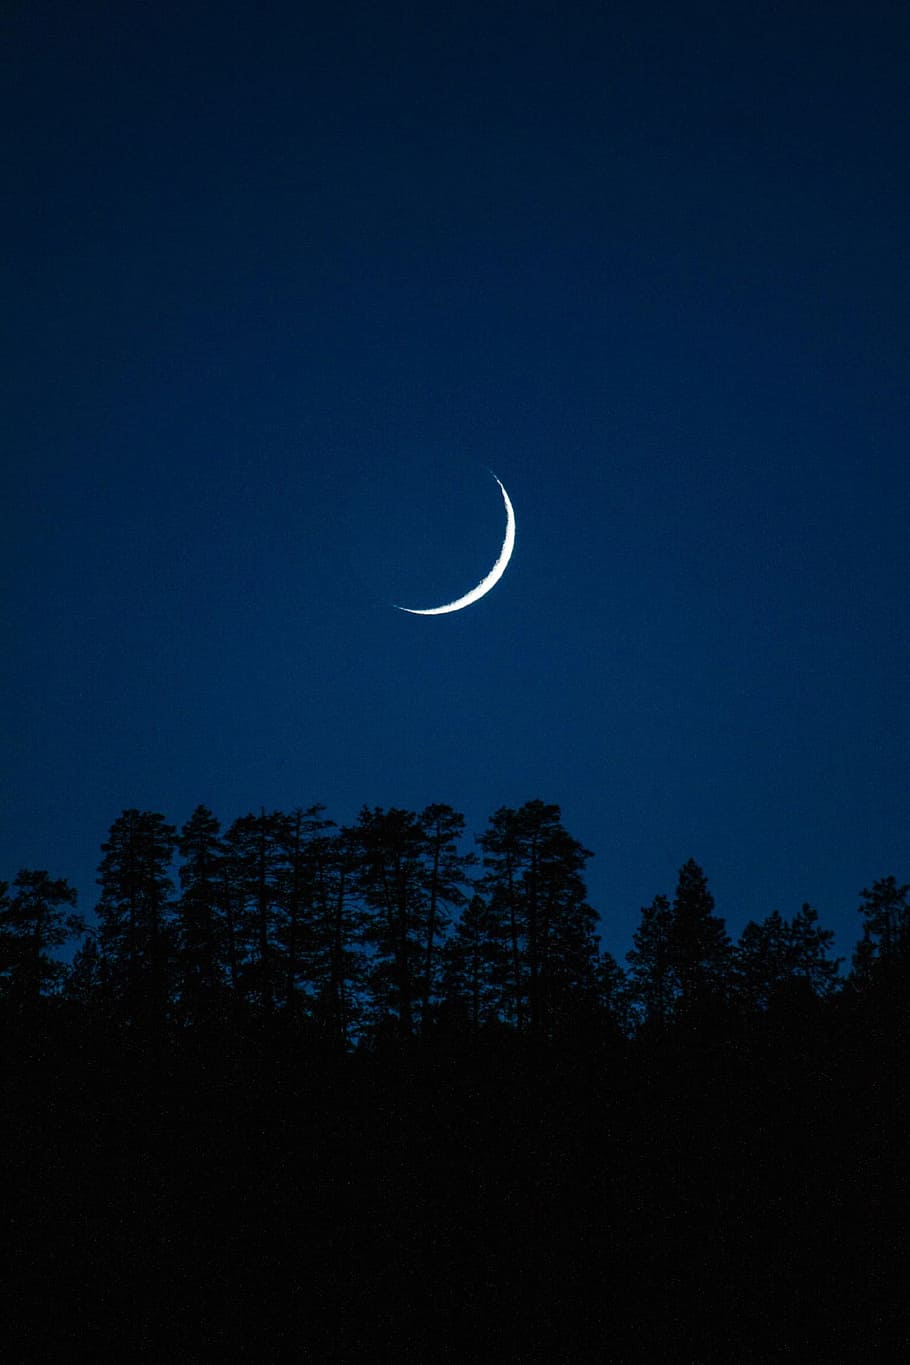 HD wallpaper: Photo Of Crescent Moon, dark, eclipse, light, luna